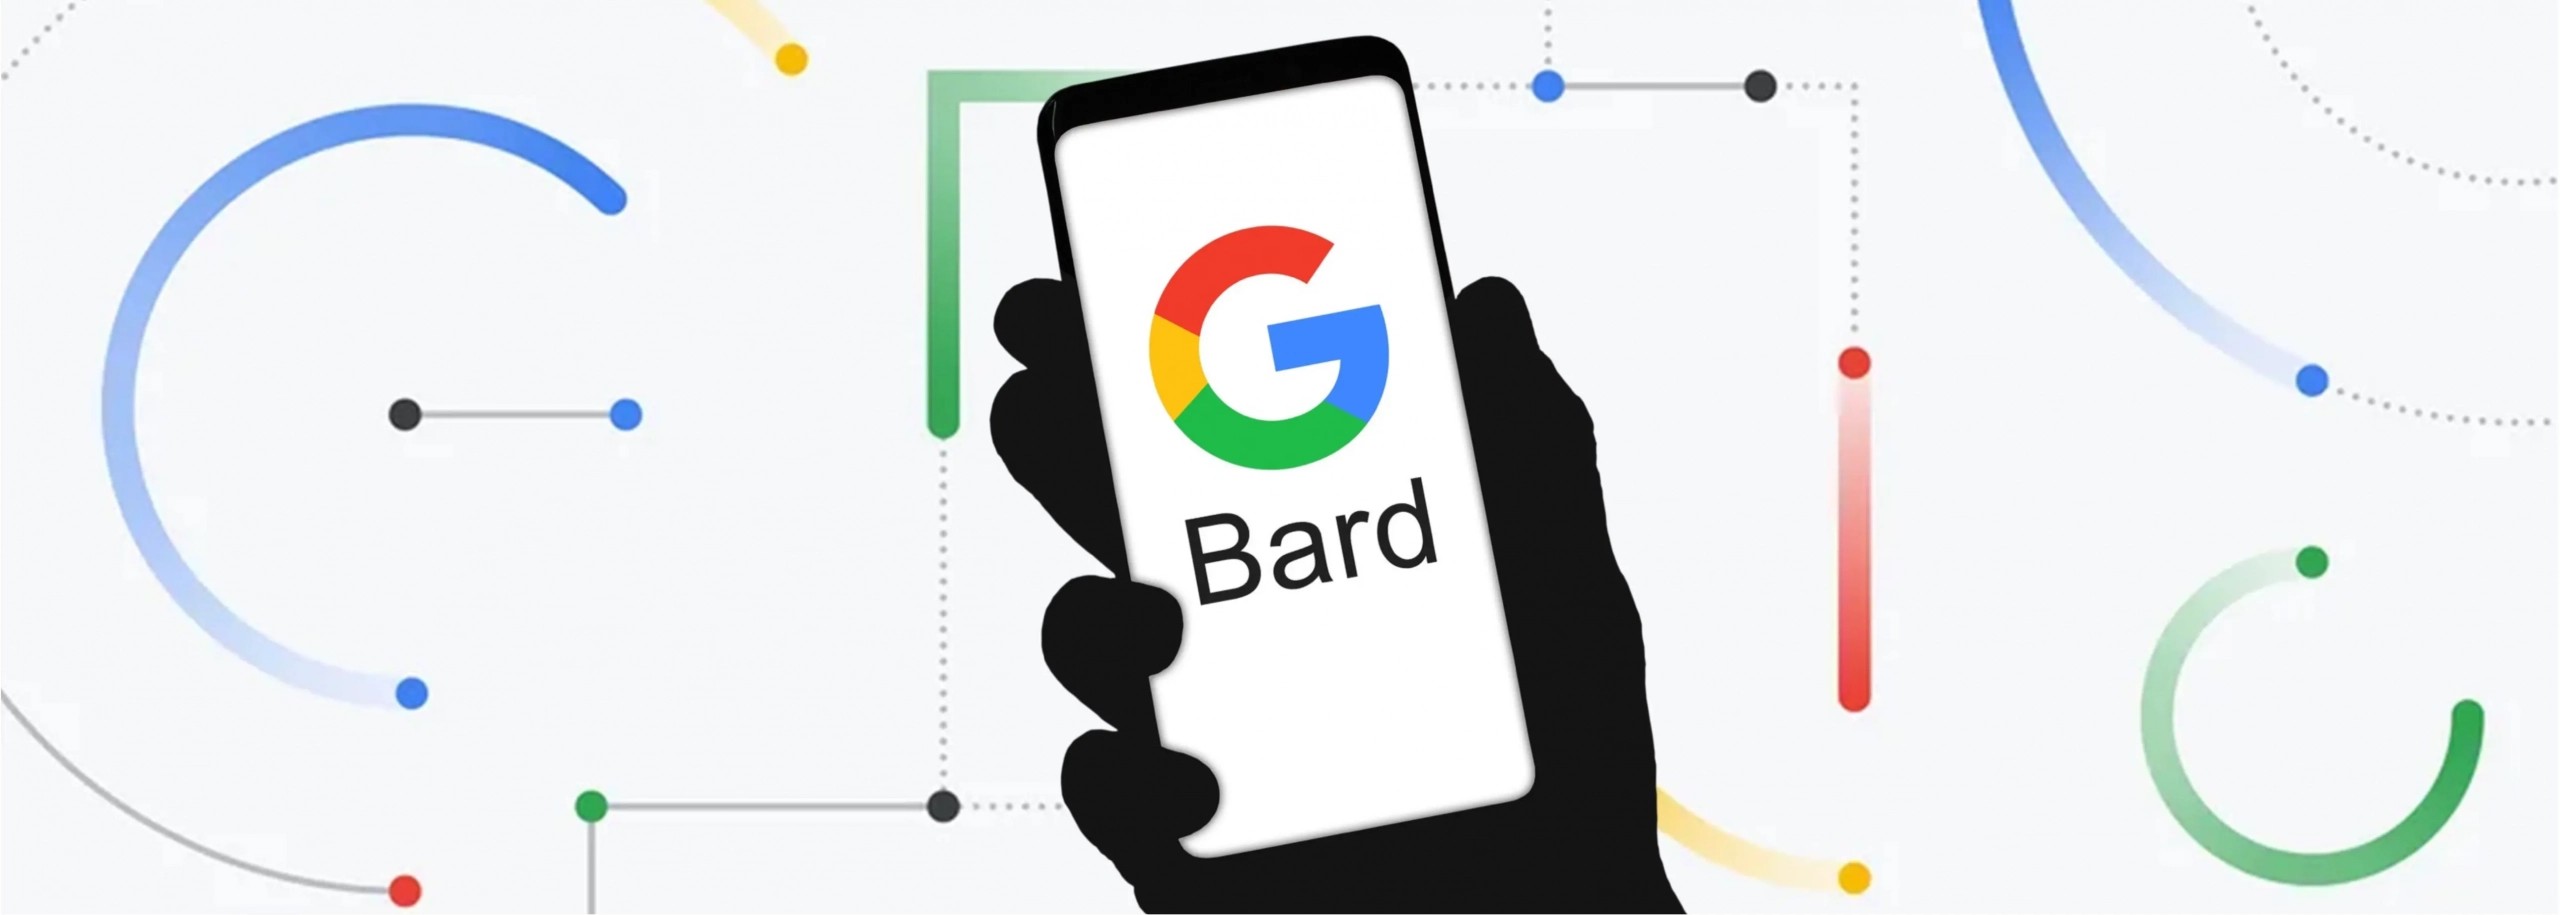 pesquisa no google bard ai